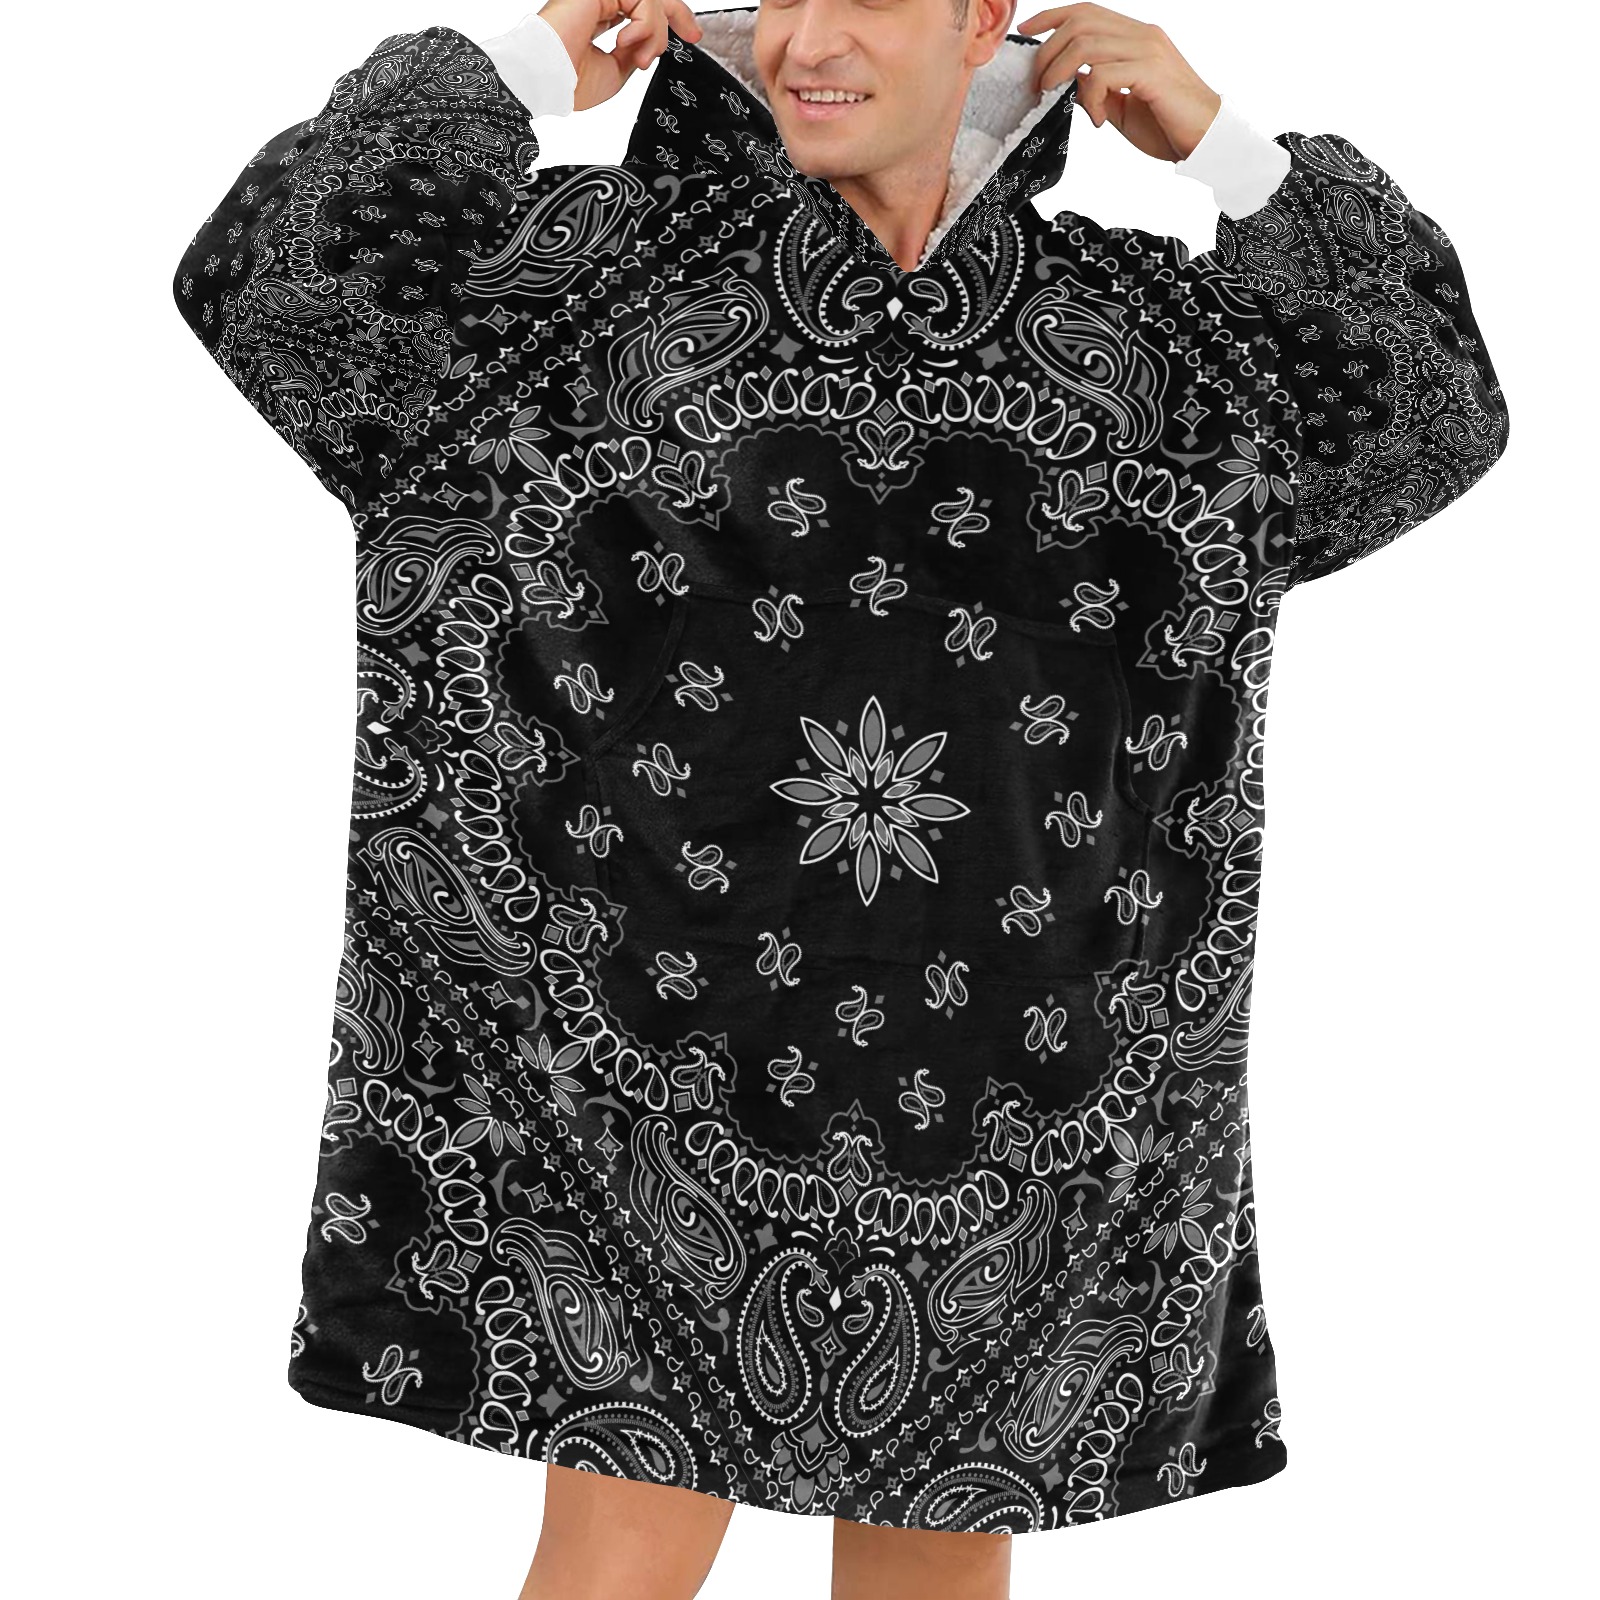 Black Bandanna Pattern / White Cuff Blanket Hoodie for Men